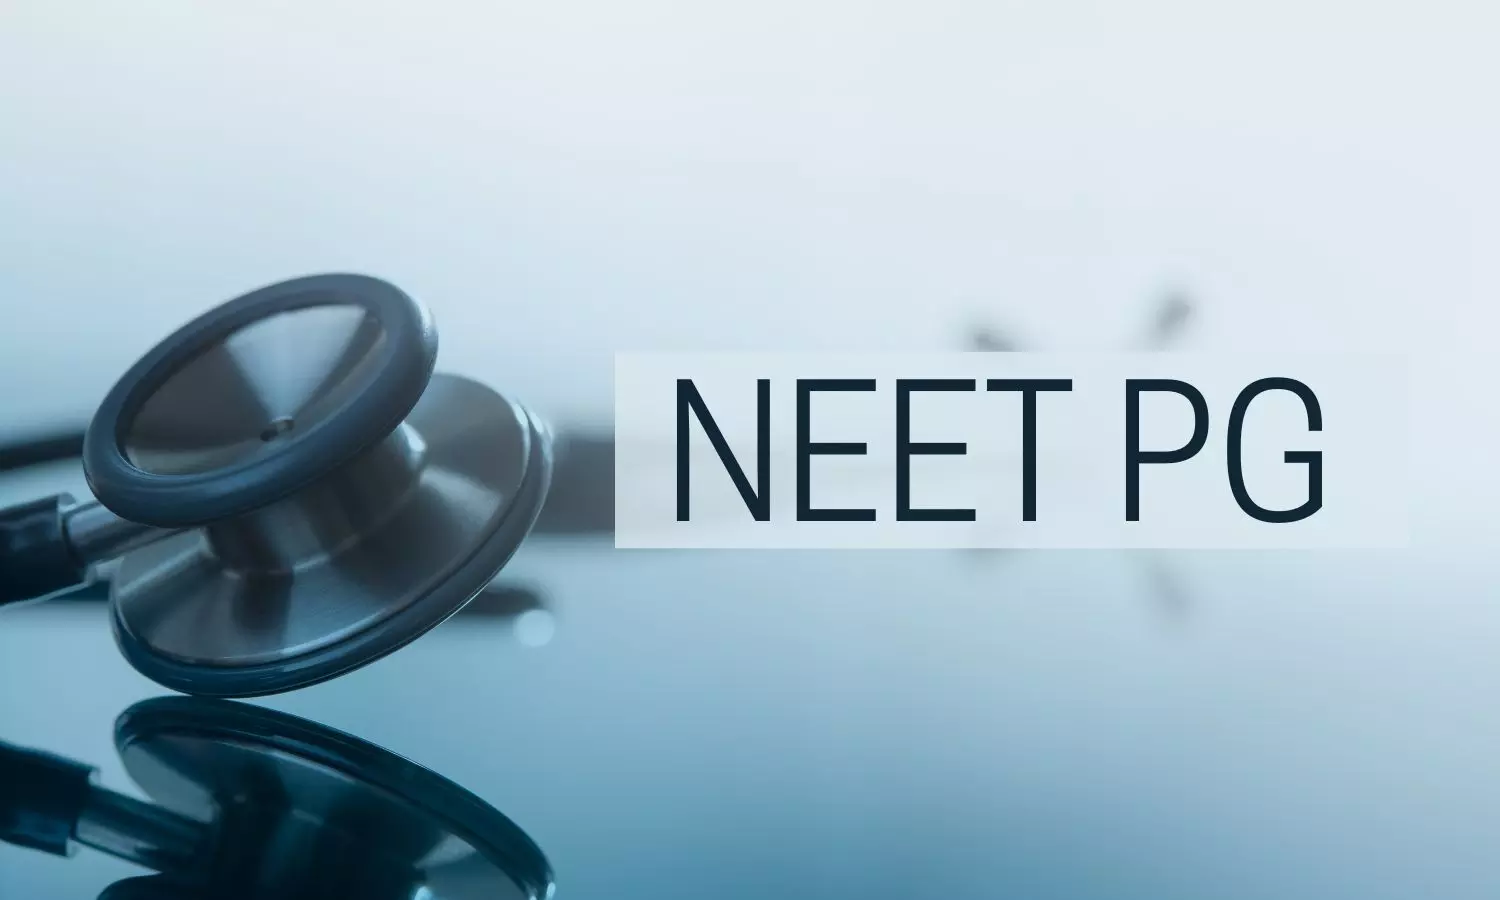 KNRUHS medicos seek postponement of NEET PG exam